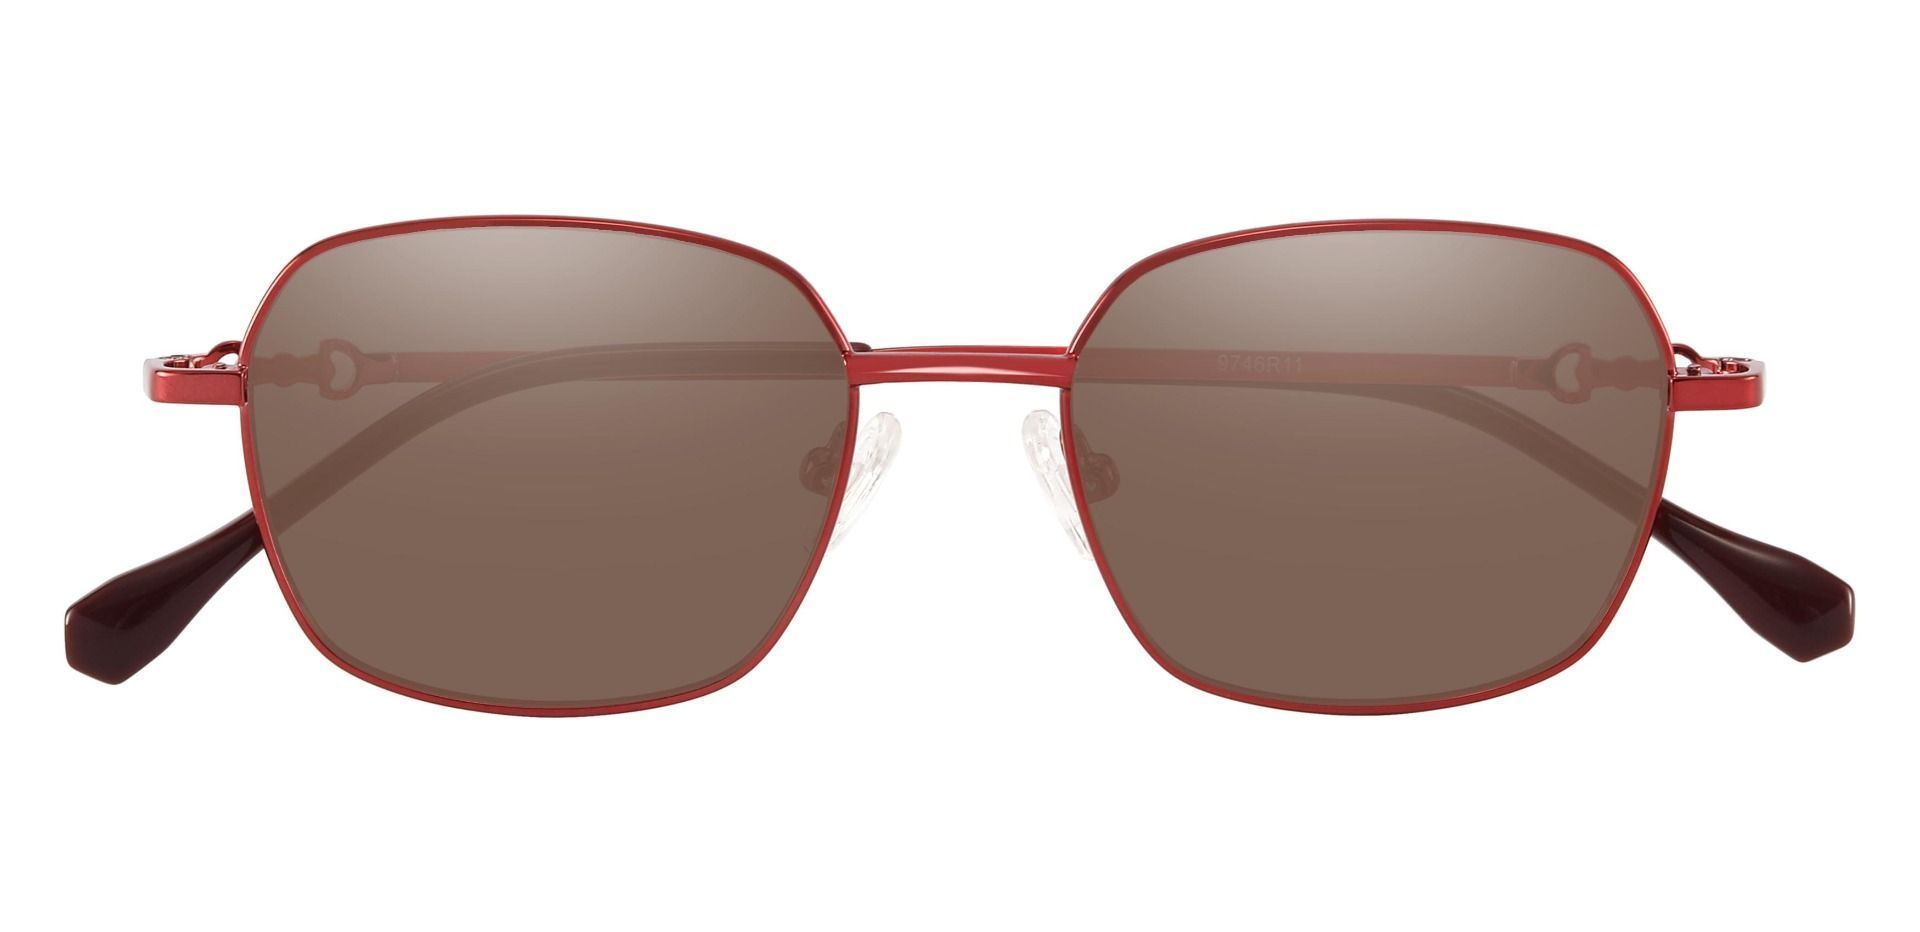 Averill Geometric Prescription Sunglasses - Red Frame With Brown Lenses